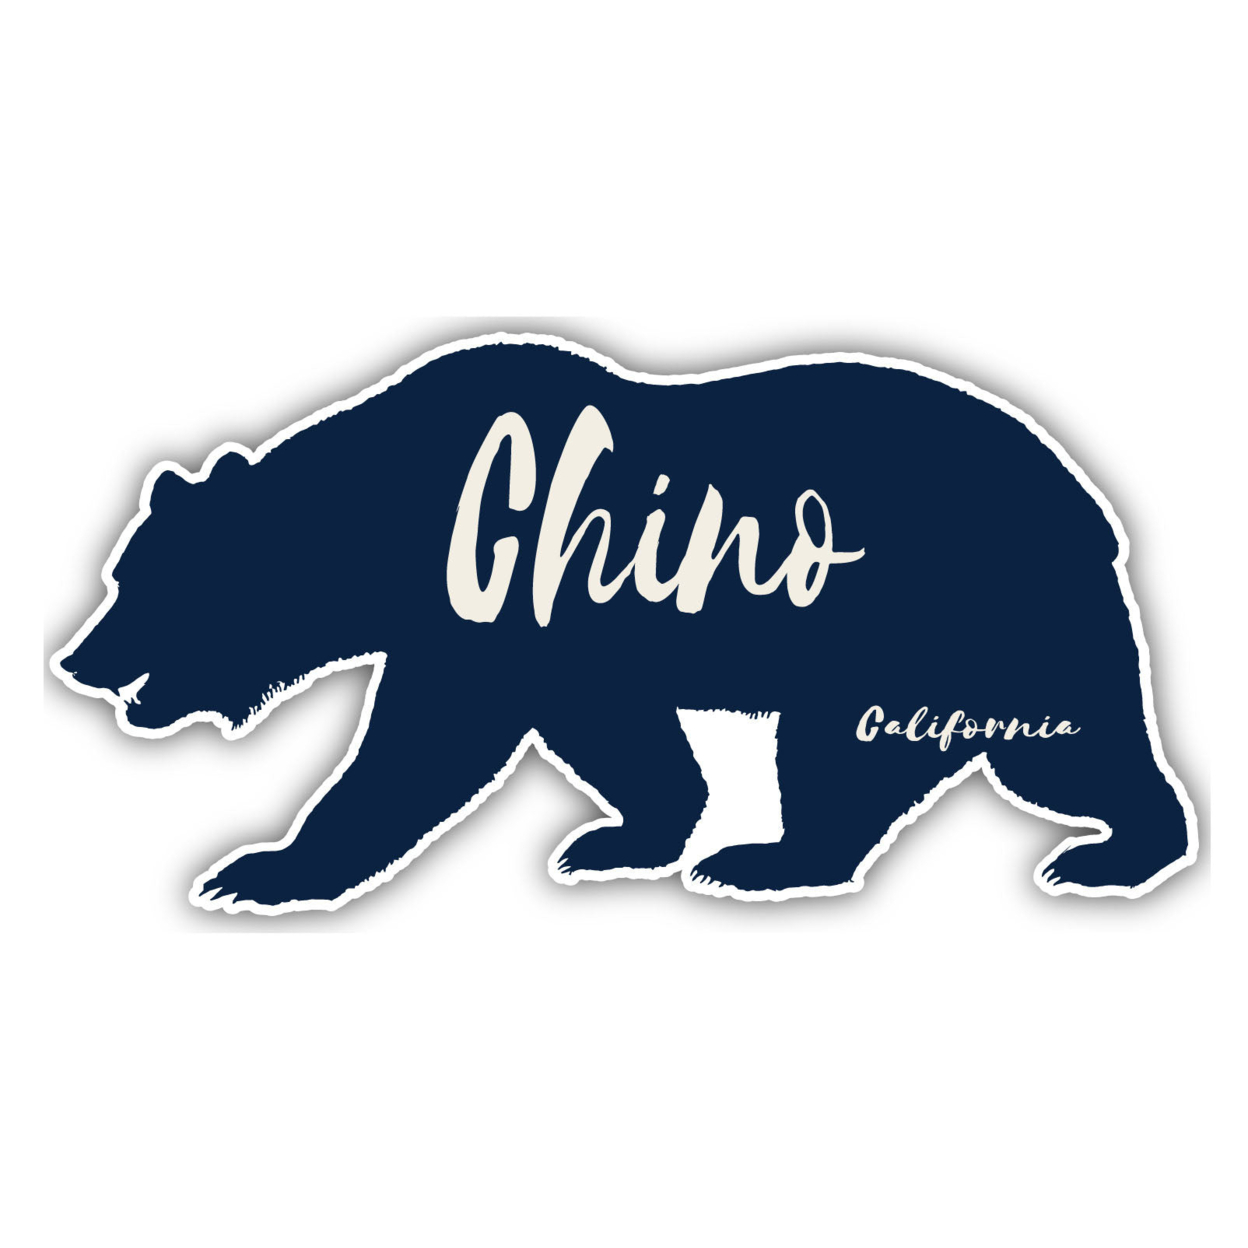 Chino California Souvenir Decorative Stickers (Choose Theme And Size) - Single Unit, 2-Inch, Bear